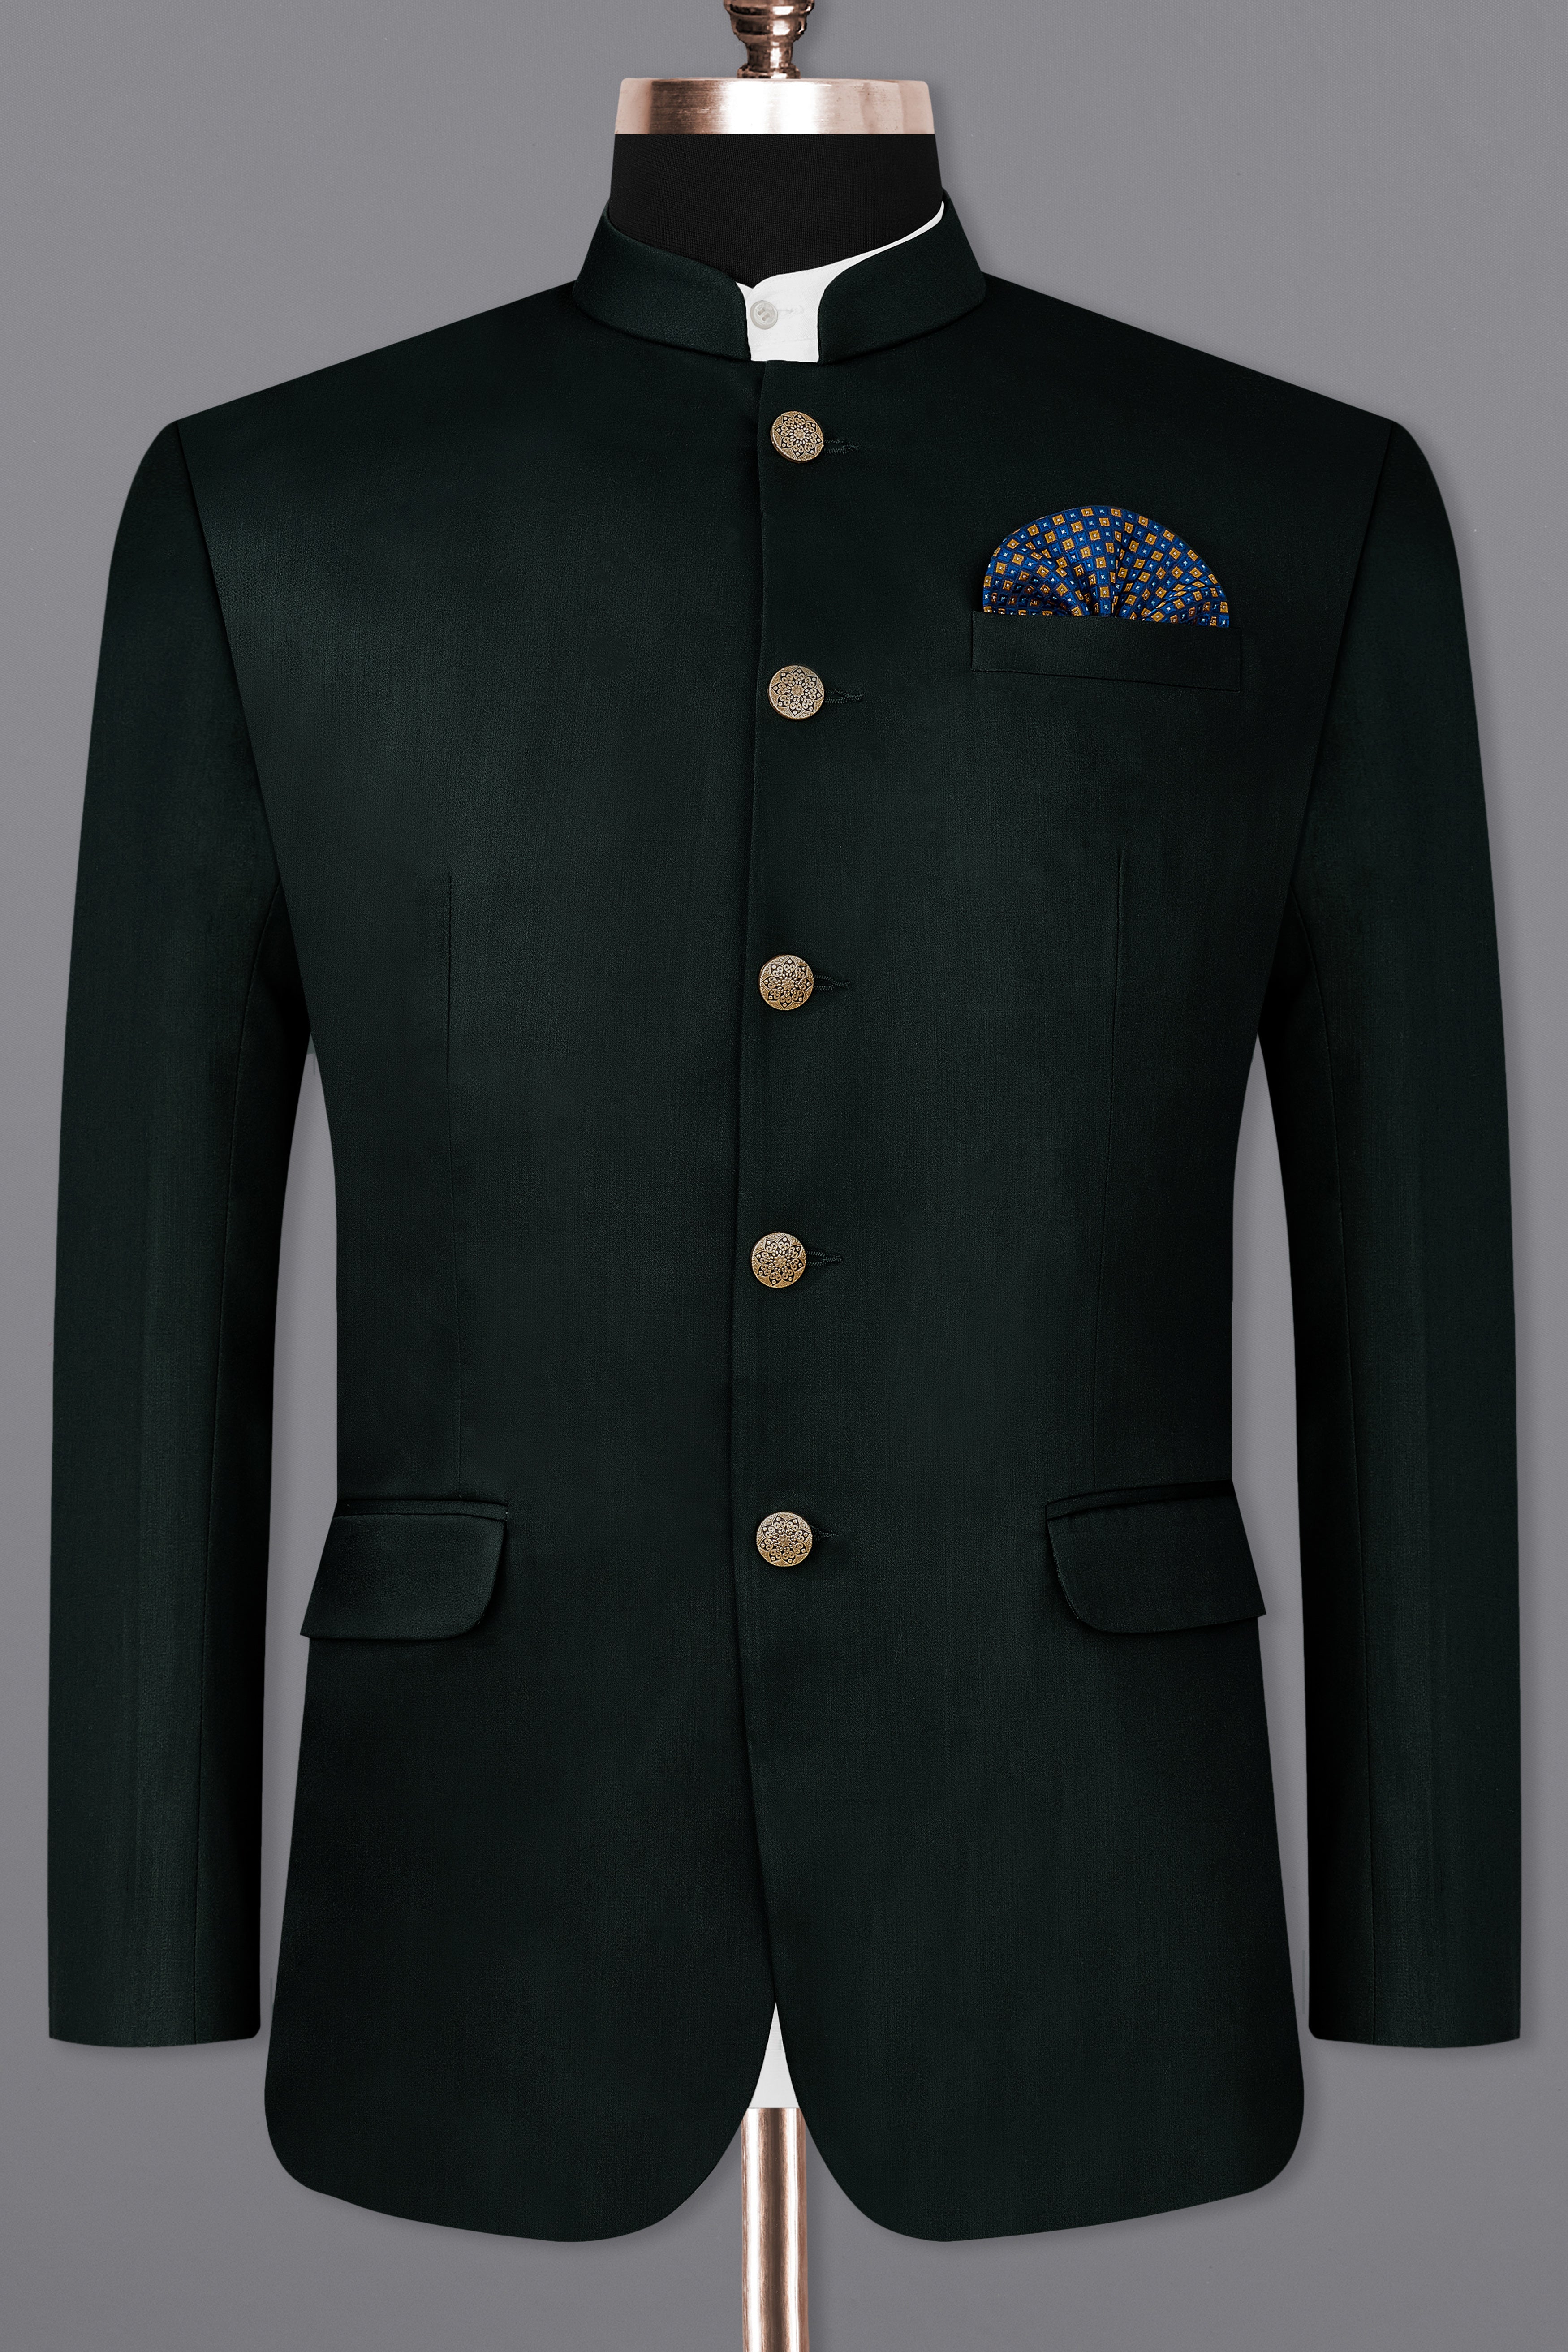 Juniper Green Subtle Sheen Bandhgala/Mandarin Suit